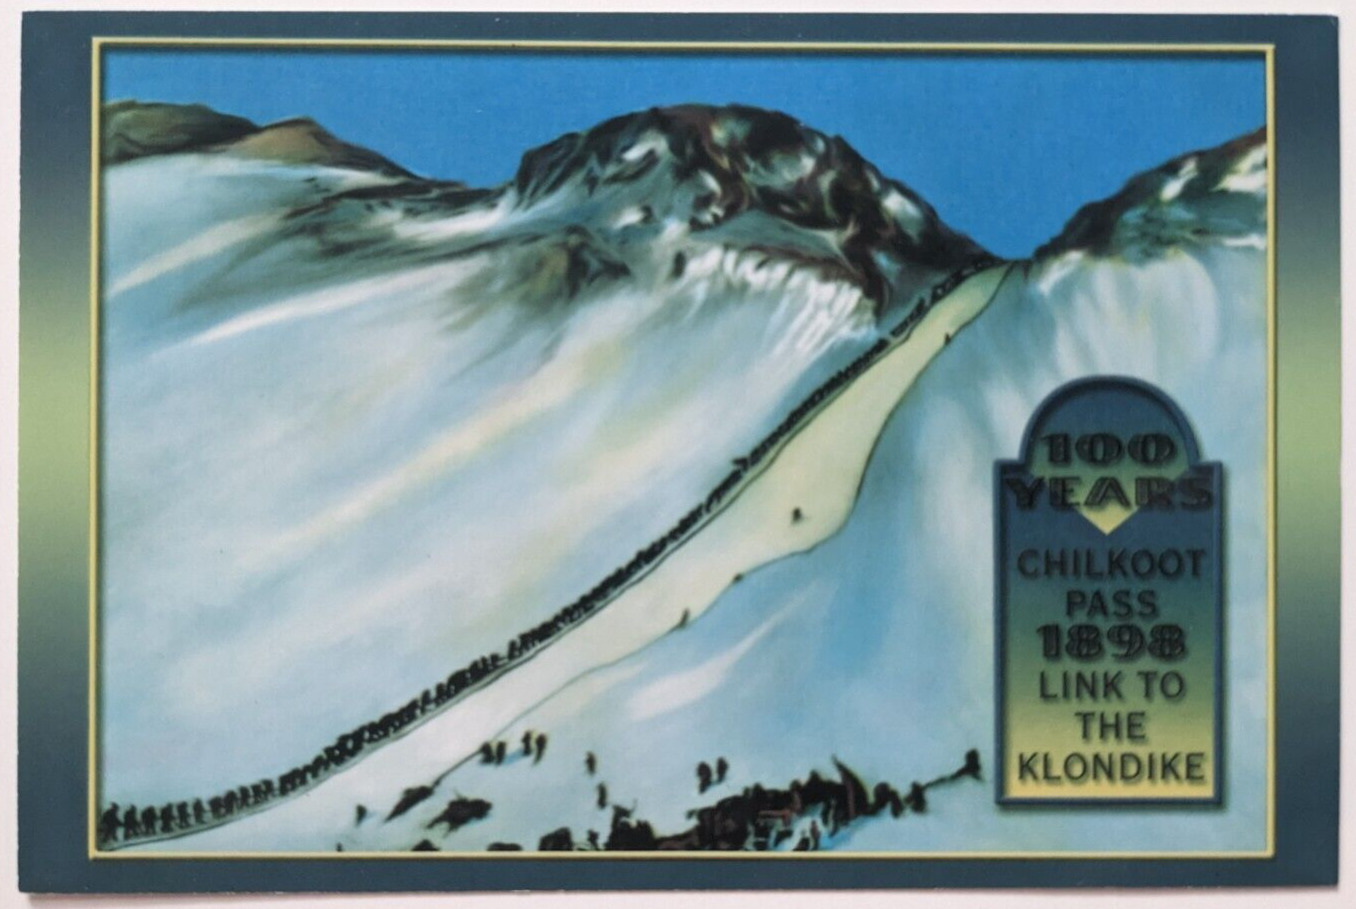 Chilkoot Pass Dyea, Alaska Postcard 100 Years 1898-1998 Link To The Klondike A9